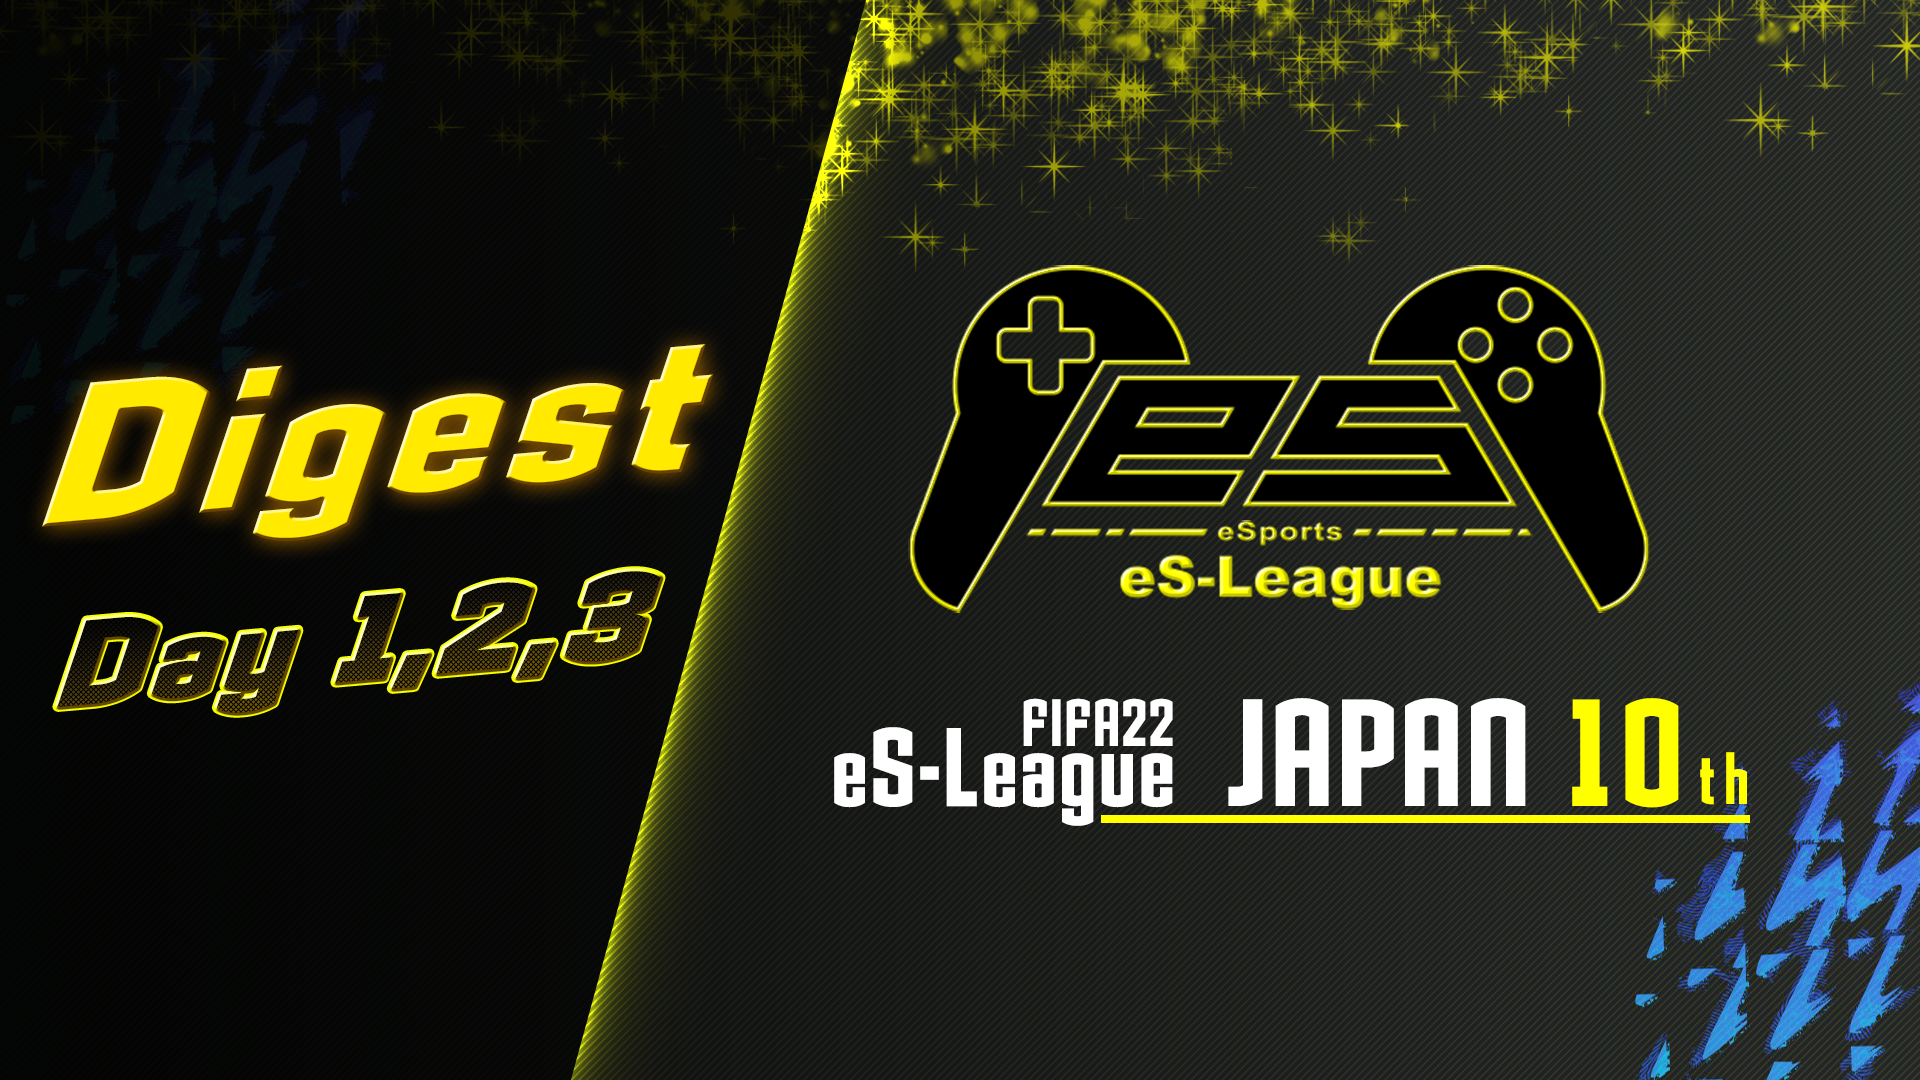 FIFA22 eS-League JAPAN 10th DAY1,2,3 ダイジェスト